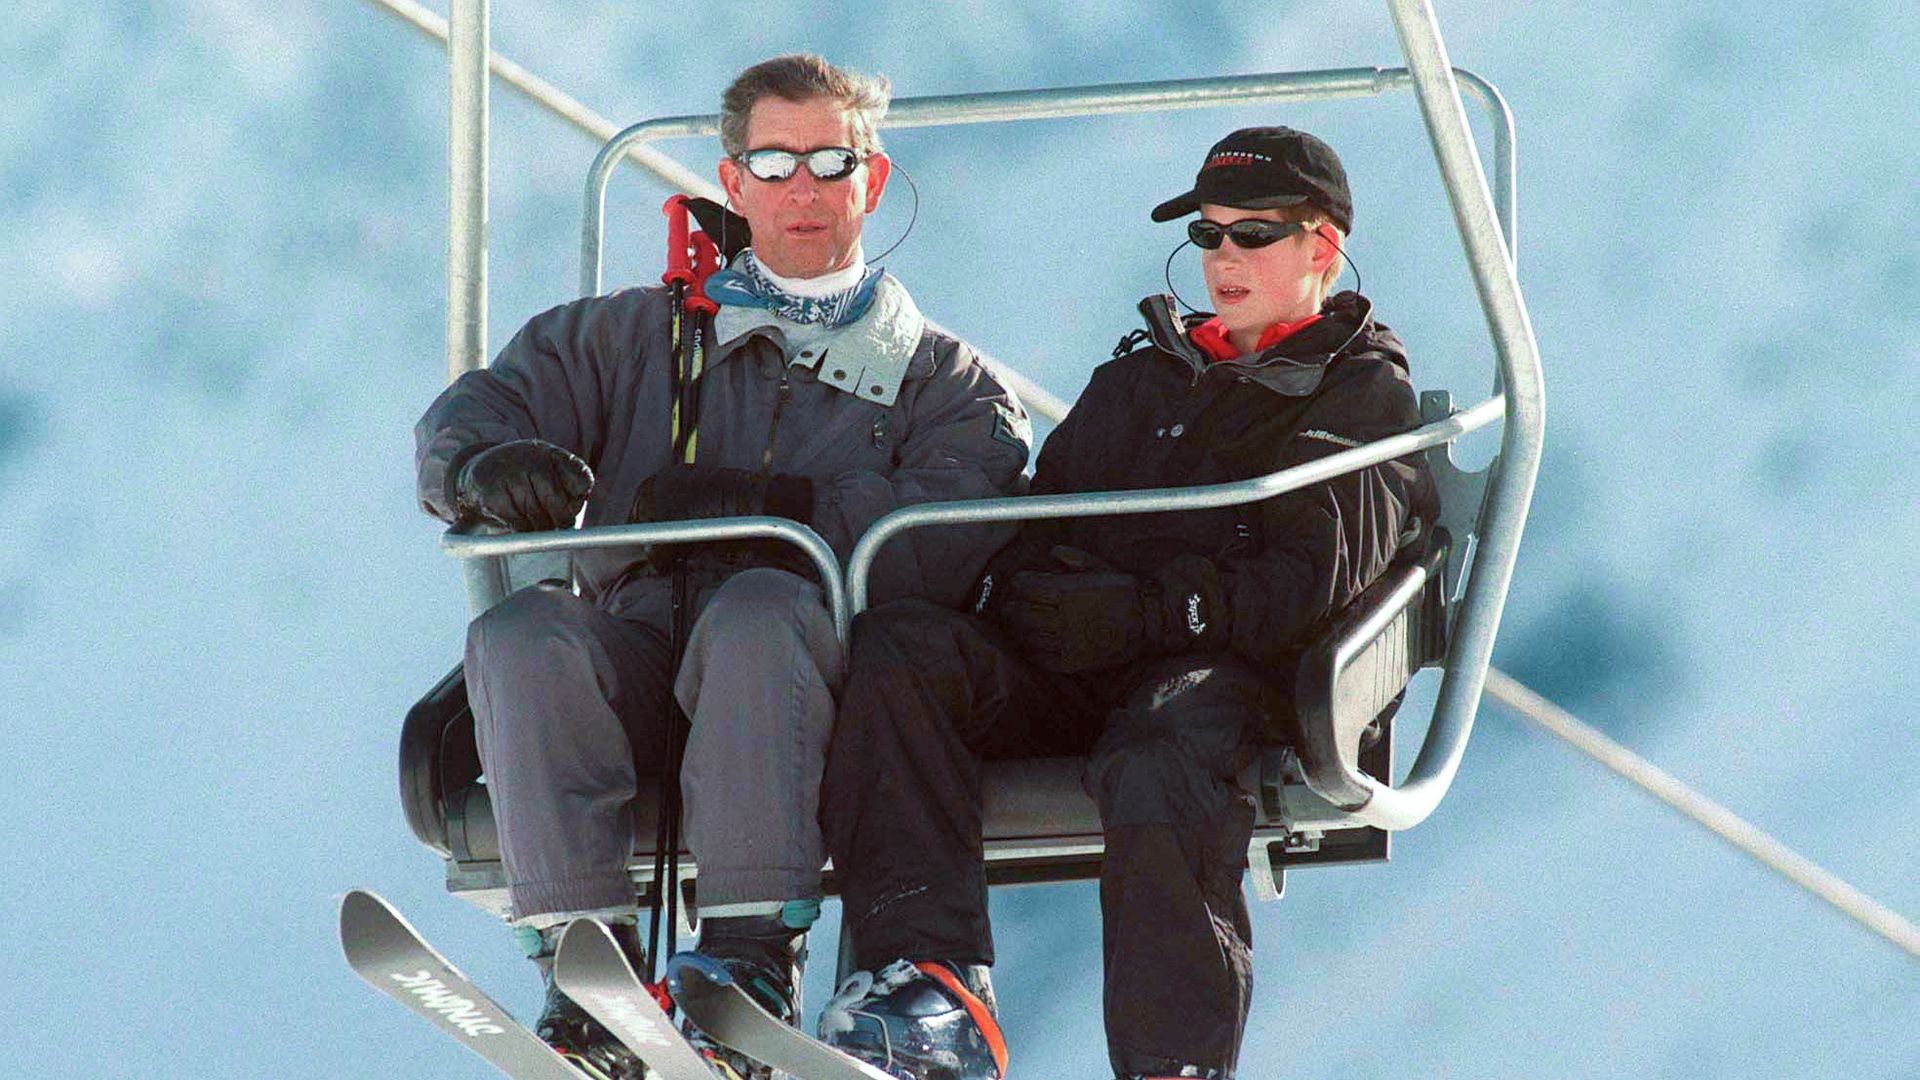 King Charles and Prince Harry on a ski lift